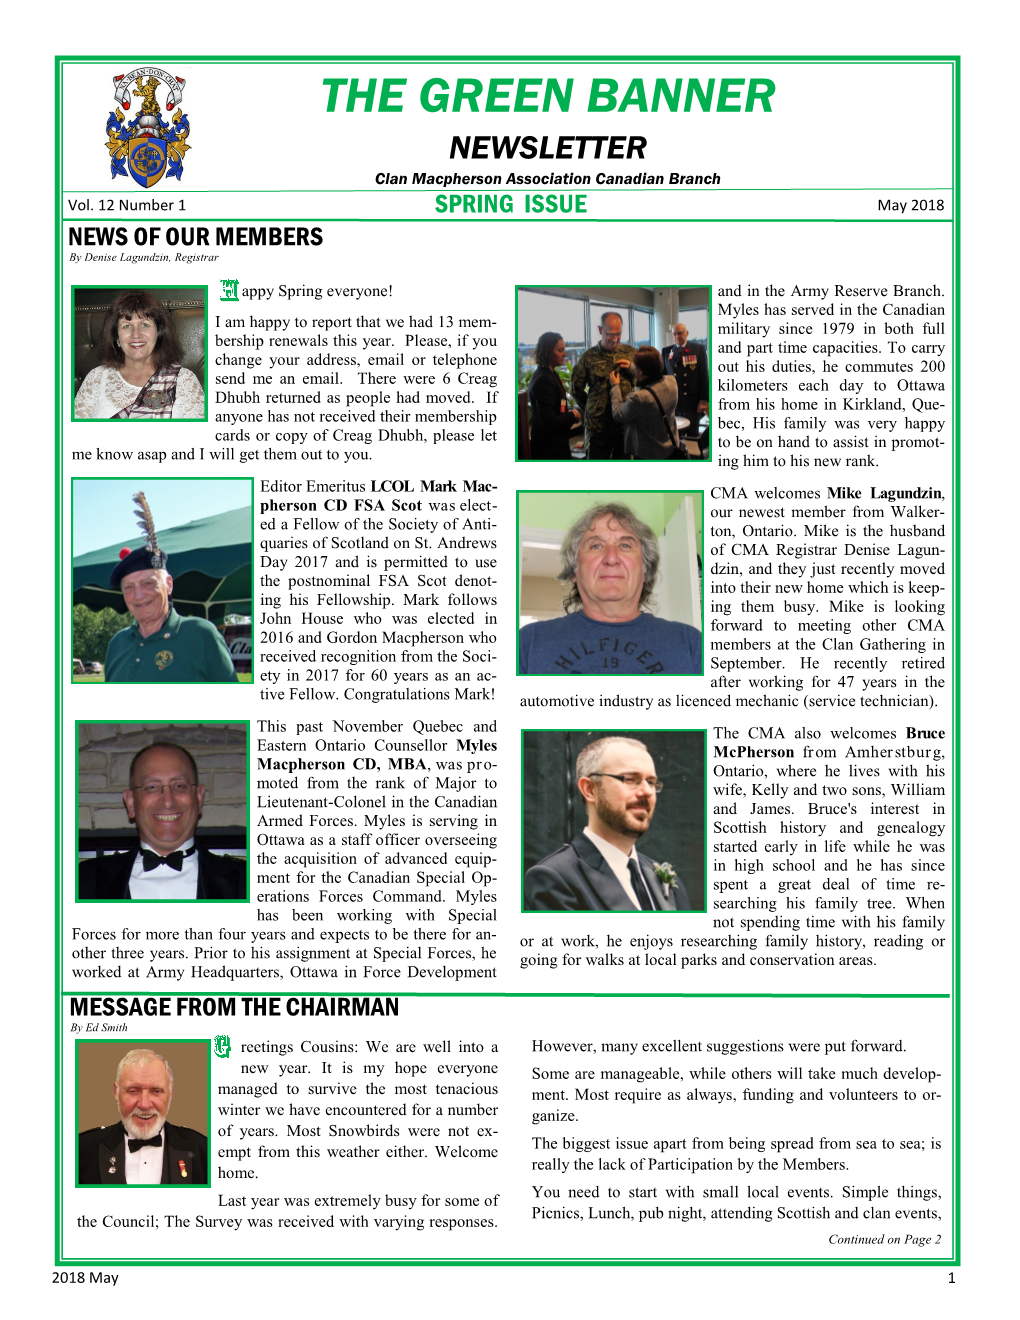 THE GREEN BANNER NEWSLETTER Clan Macpherson Association Canadian Branch Vol